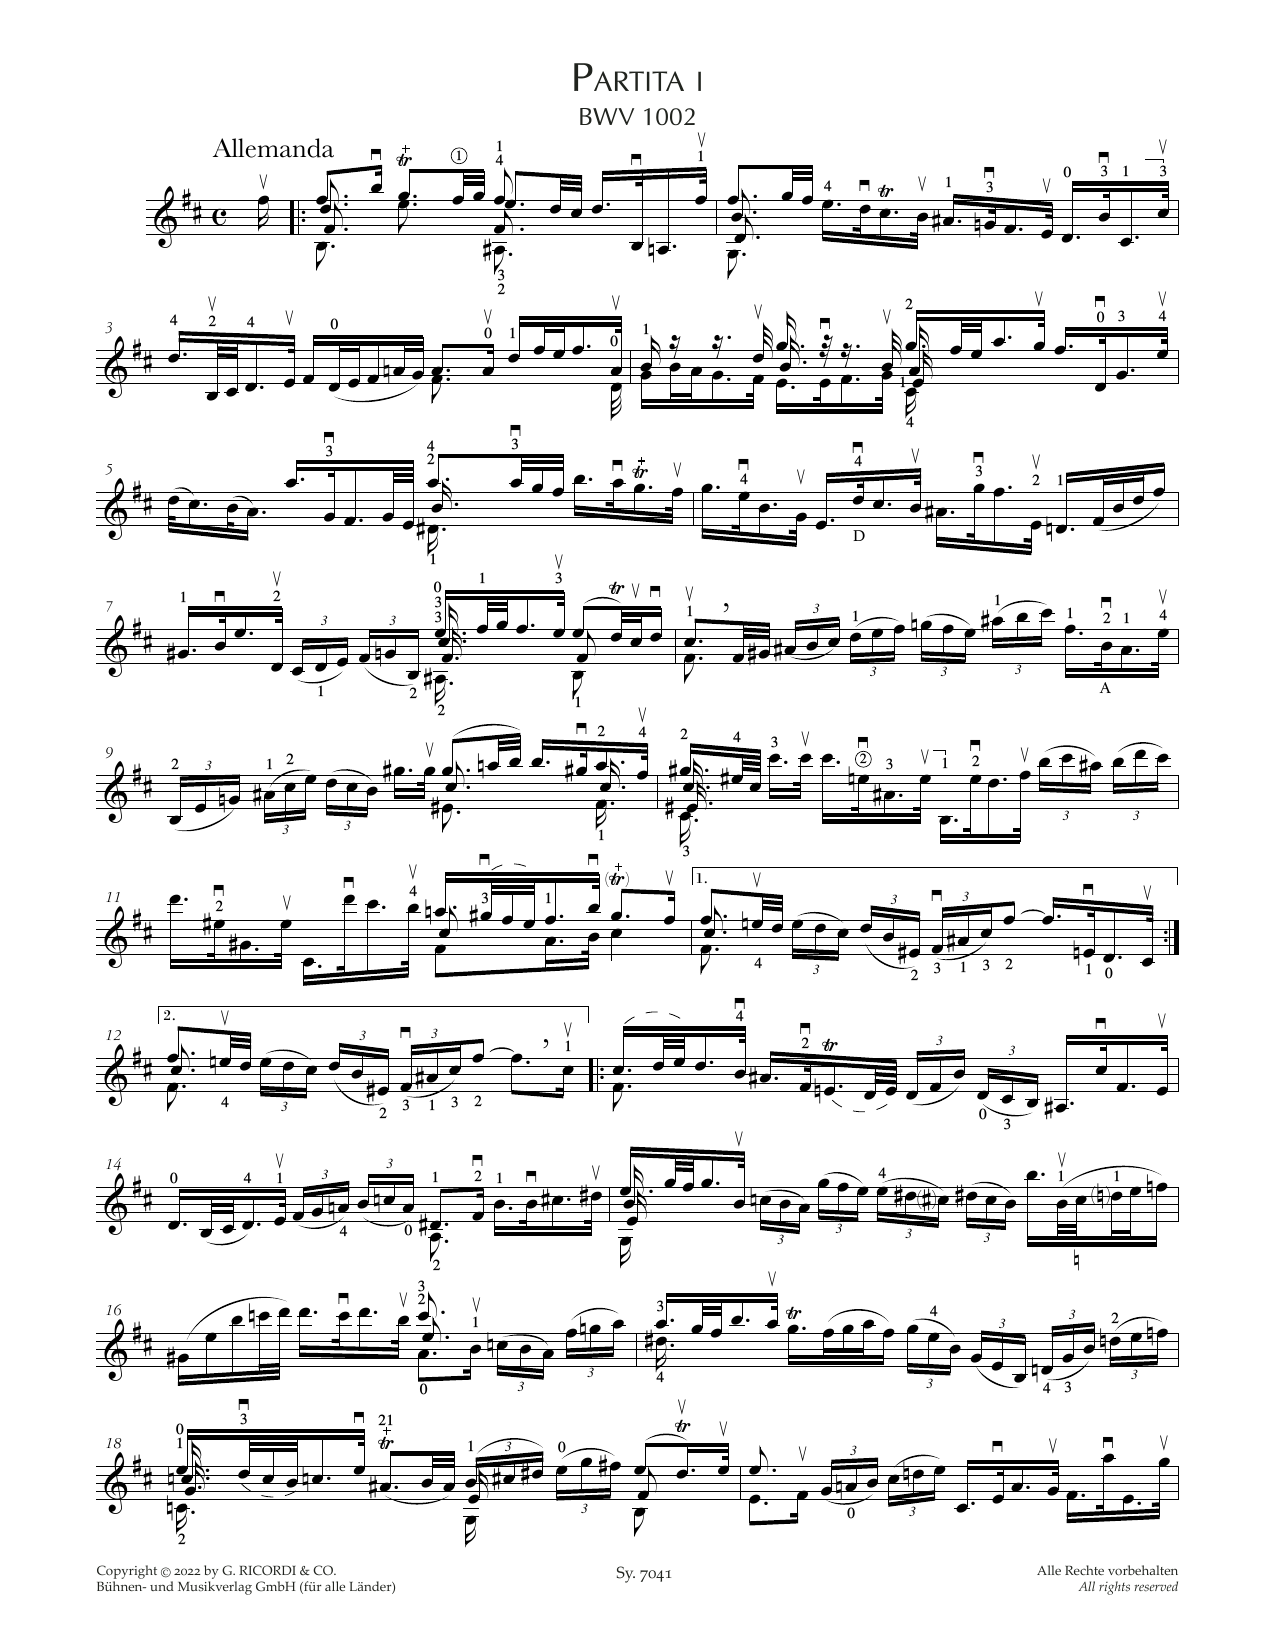 Johann Sebastian Bach Partita I, BWV 1002 Sheet Music Notes & Chords for Violin Solo - Download or Print PDF